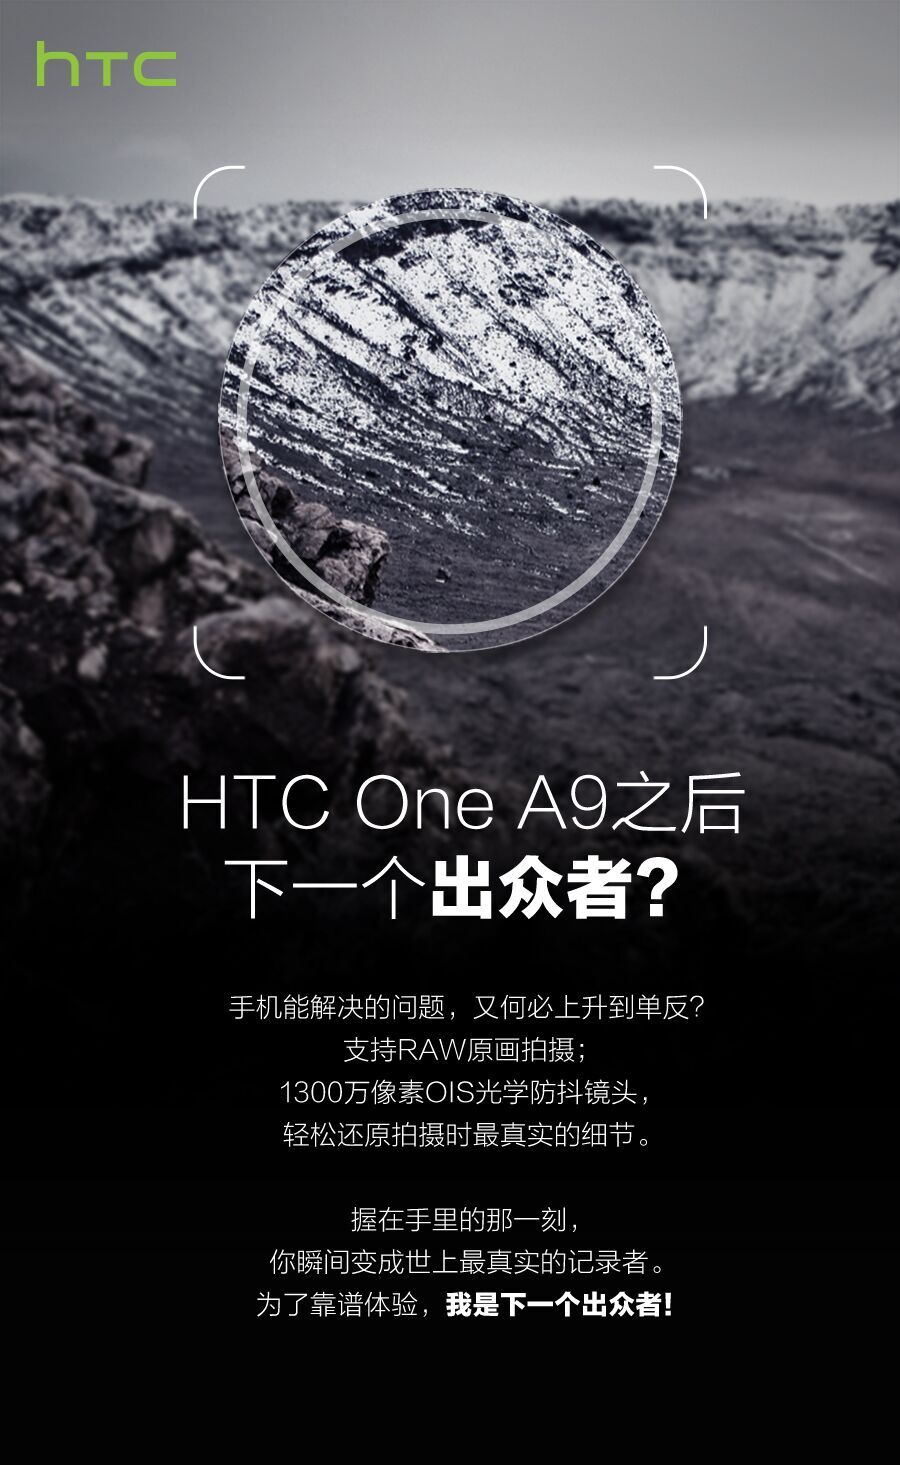 HTC One X9 Teaser